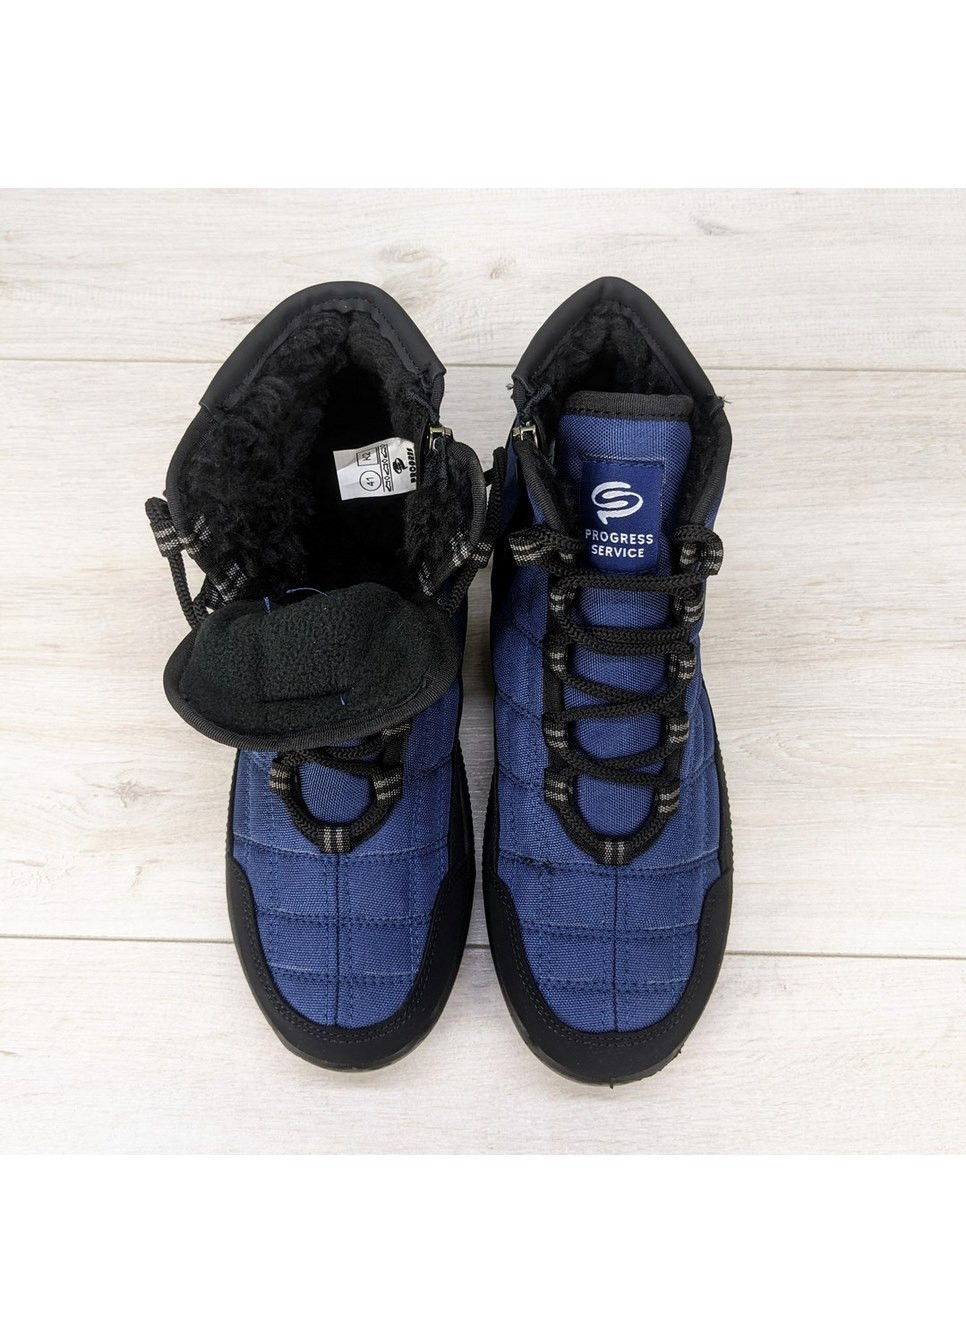 Синие зимние ботинки мужские дутики зимние на шнурках Progress